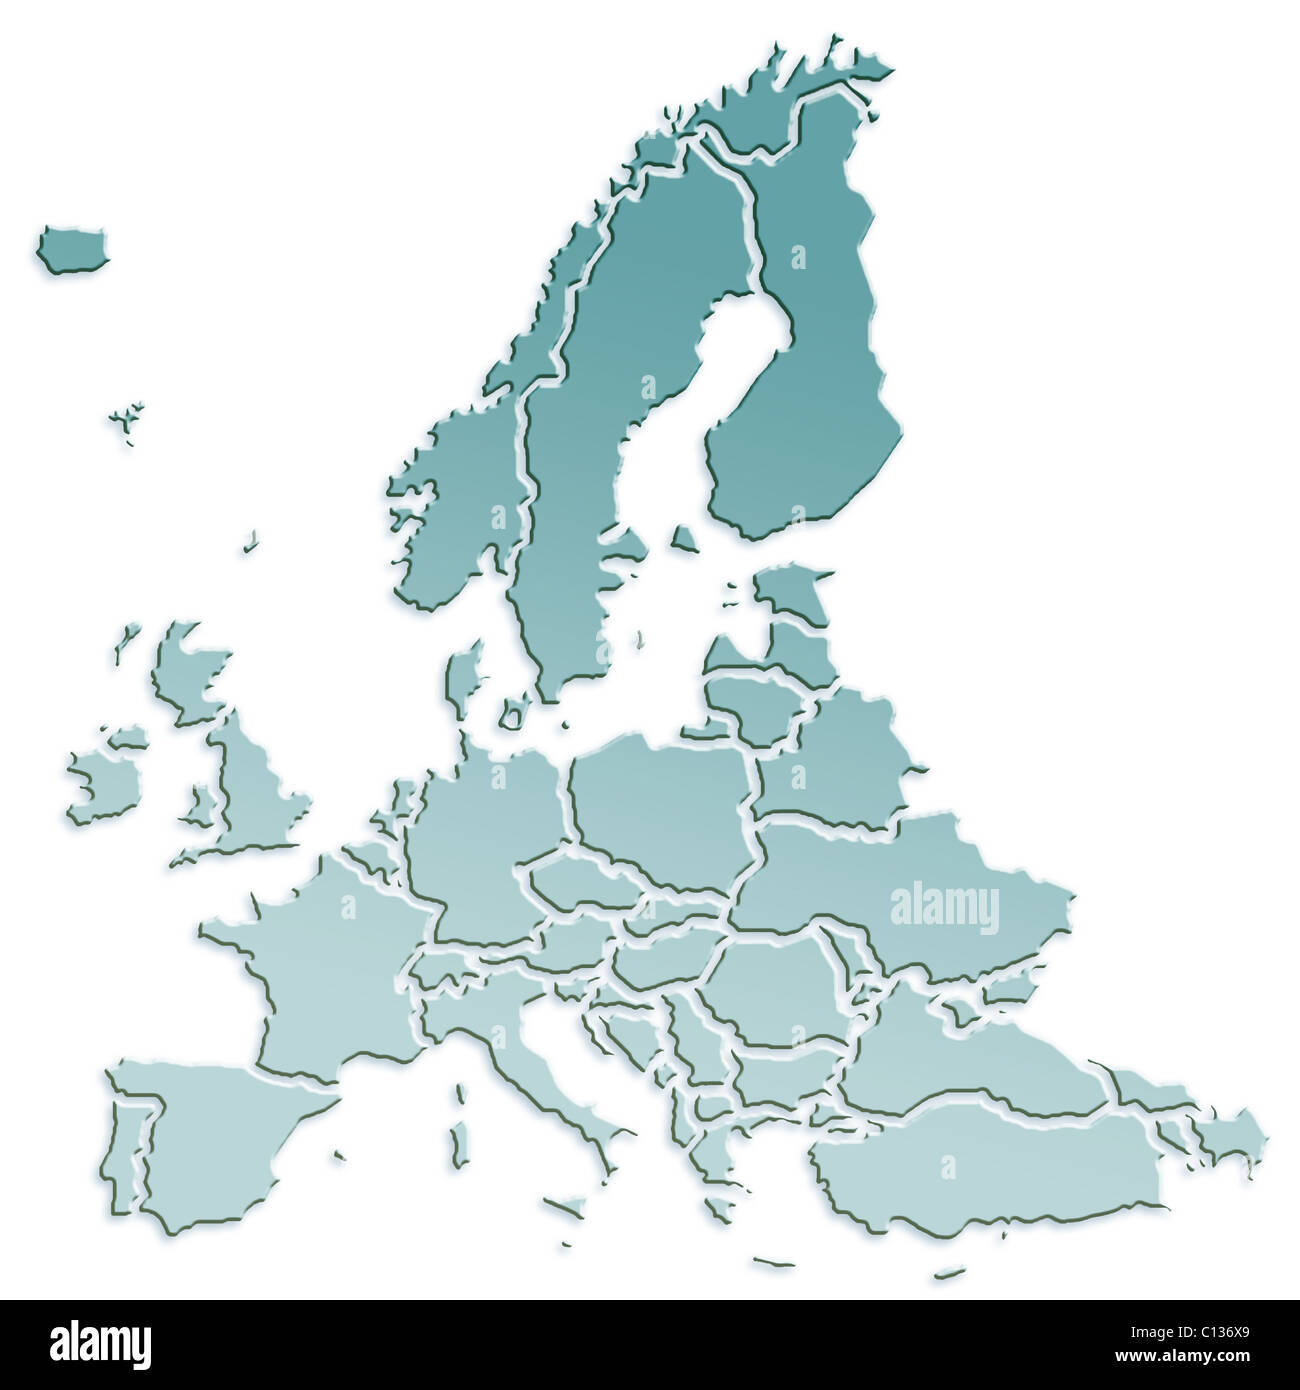 Mappa di paesi europei su sfondo bianco Foto Stock